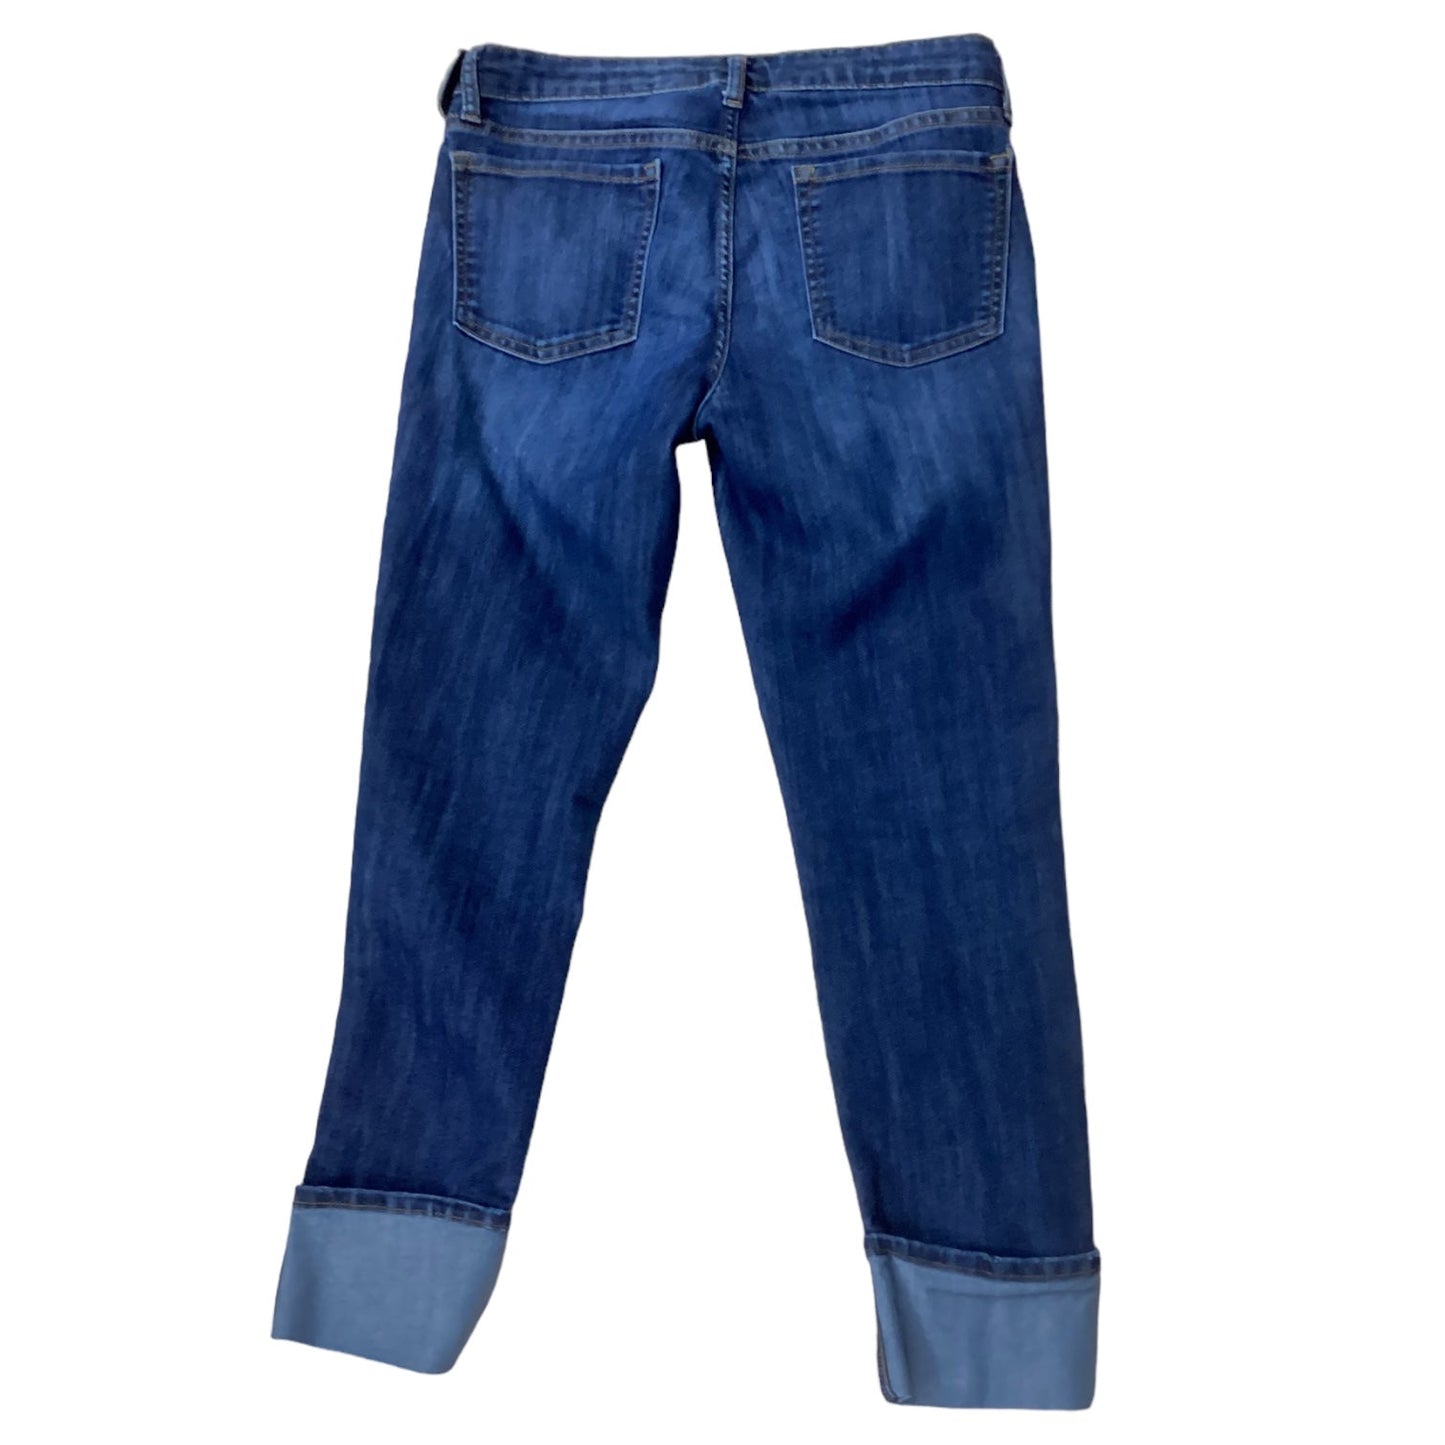 Denim Jeans Straight Gap, Size 6